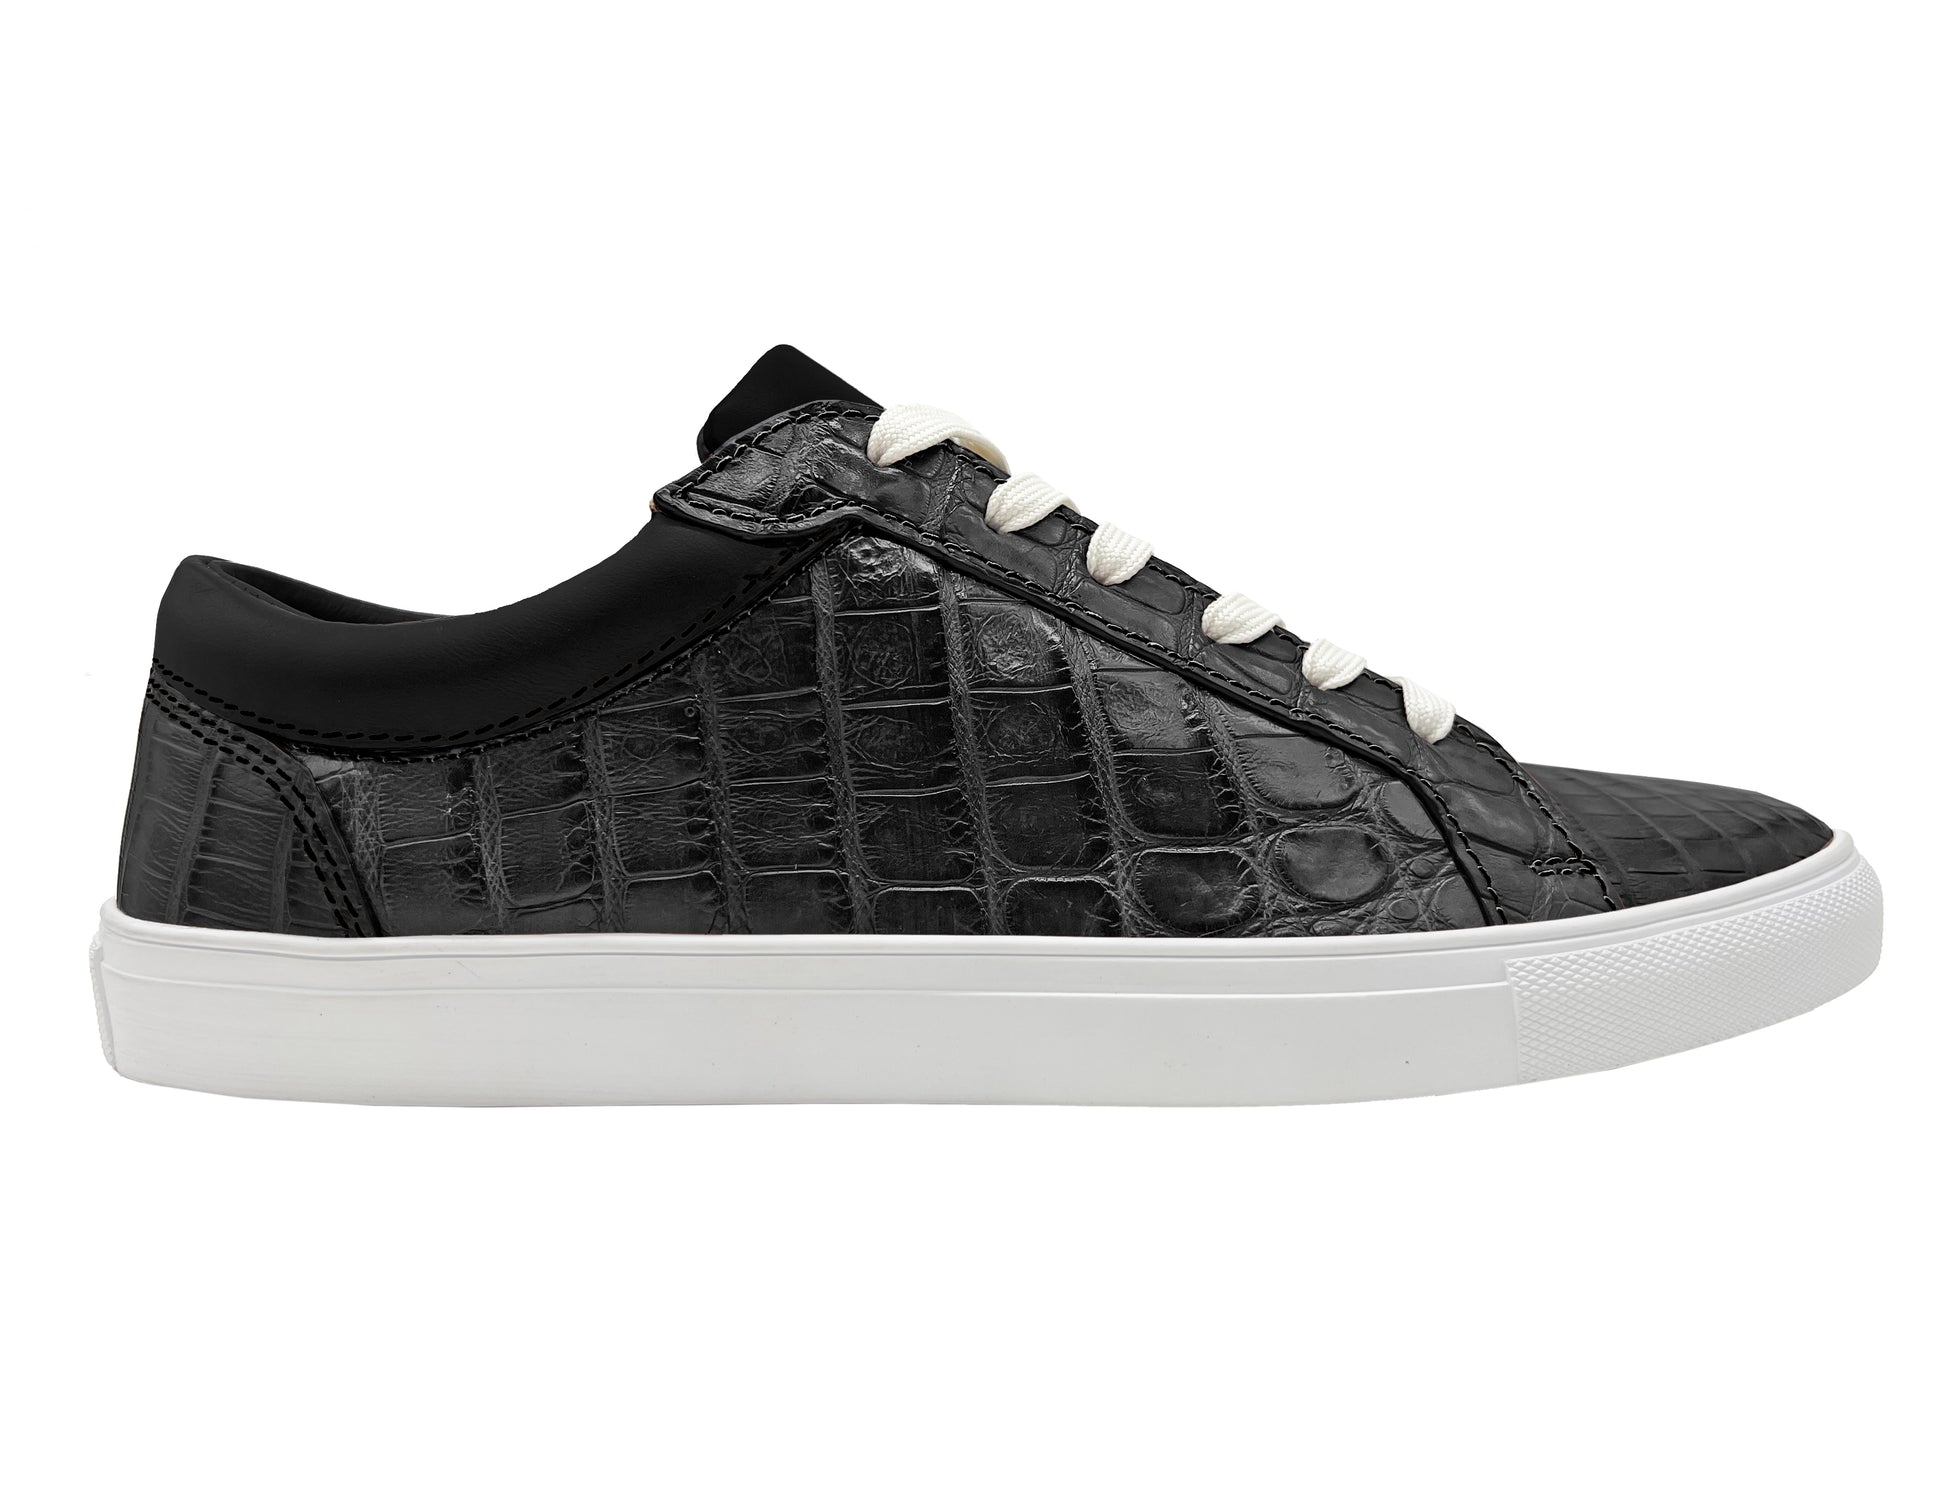 Black Crocodile Sneaker